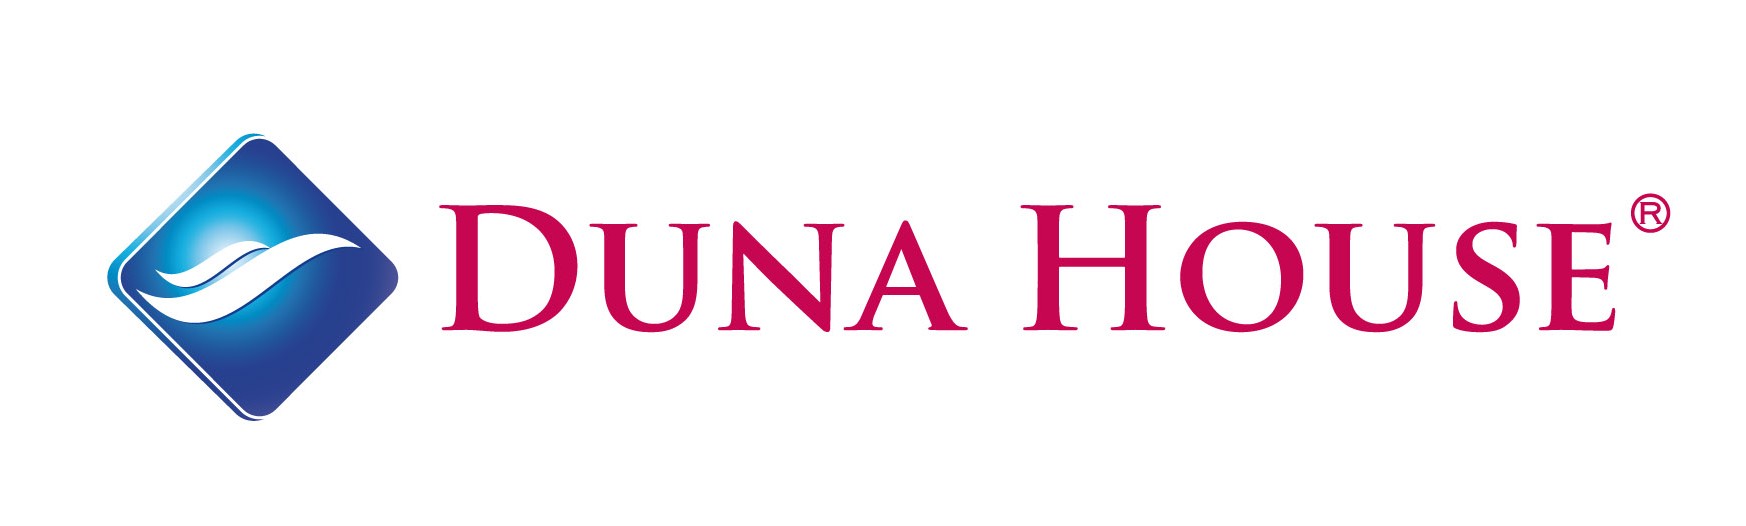 Duna House - logo